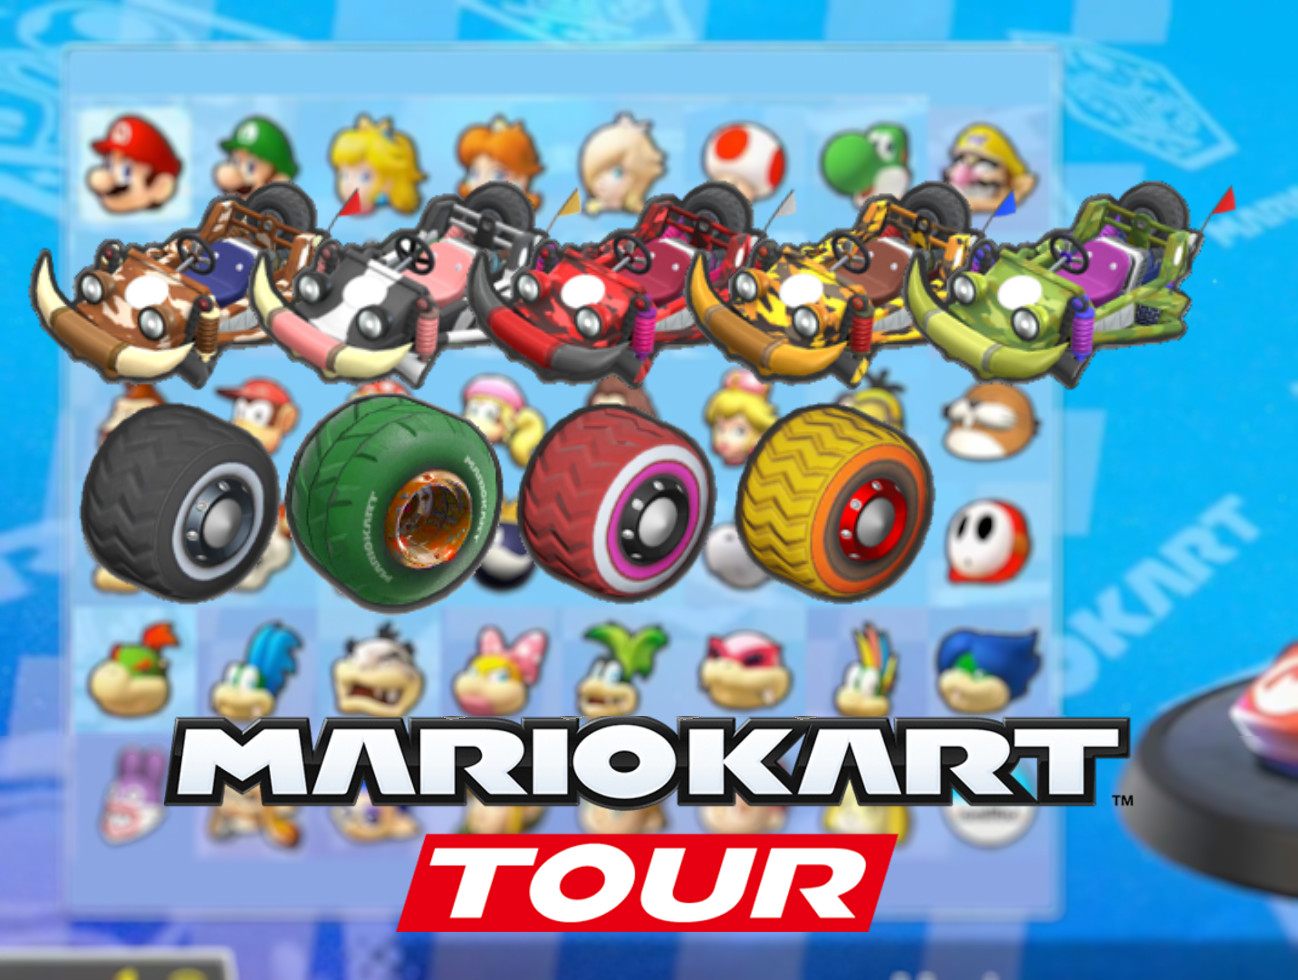 Offroader Pack and Offroader Tires (Tour port) [Mario Kart 8